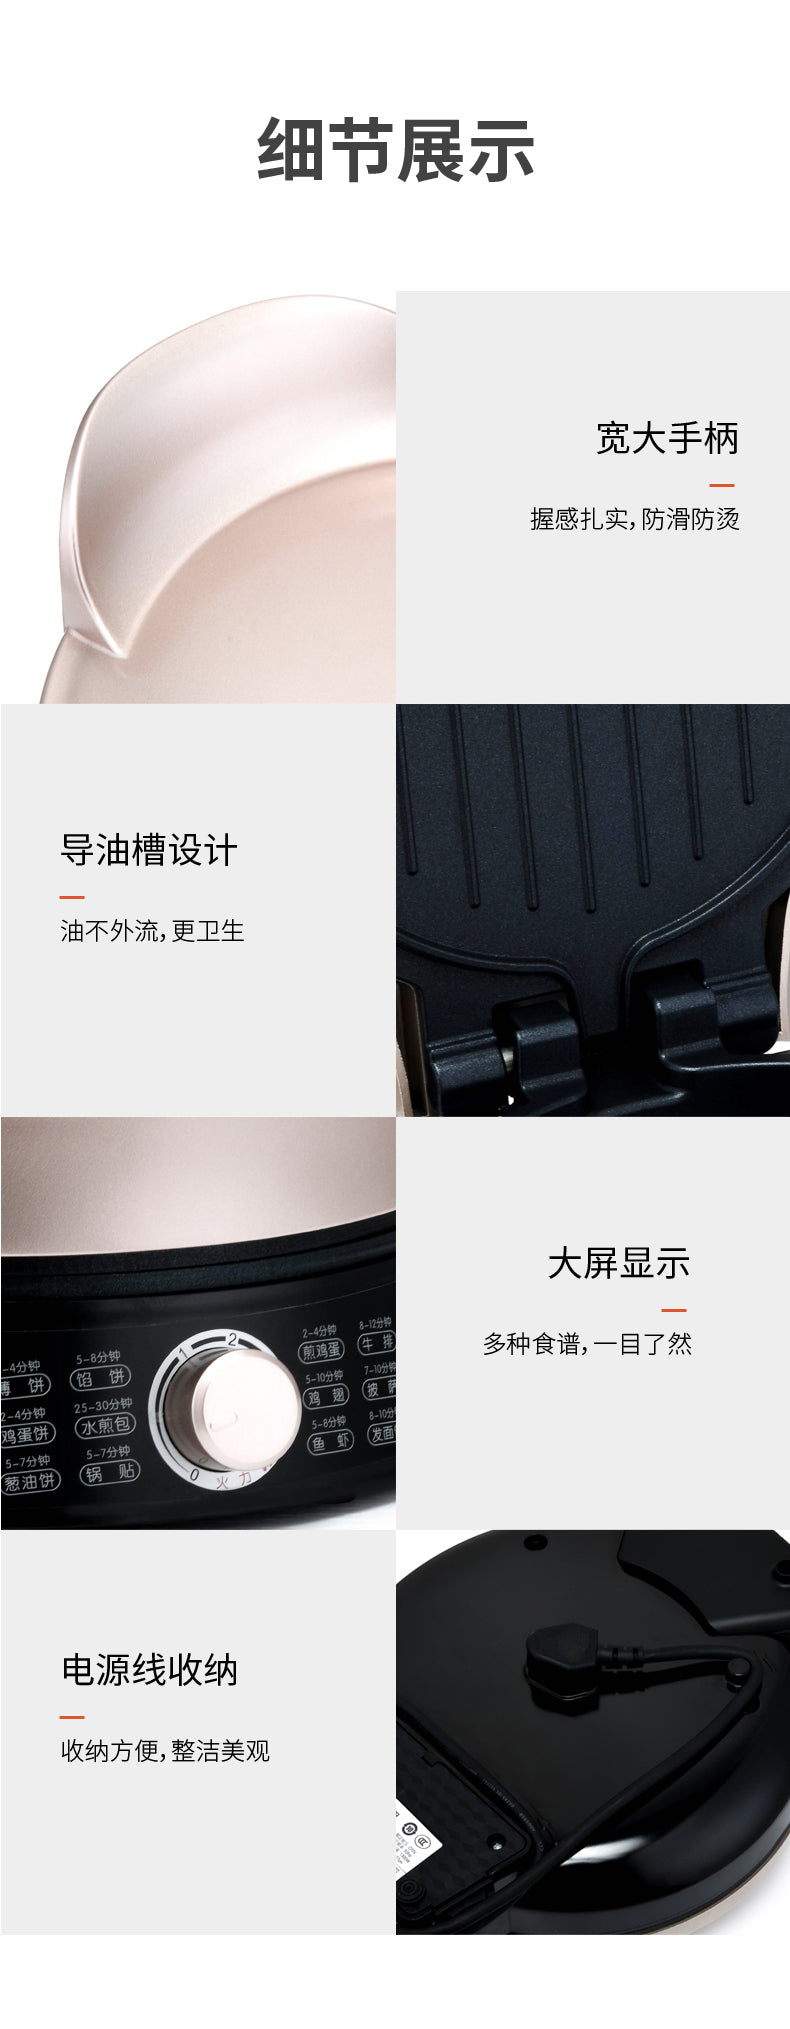 Joyoung household electric baking pan, breakfast machine, pancake machine, double-sided heating, suspension design JK-30K09X